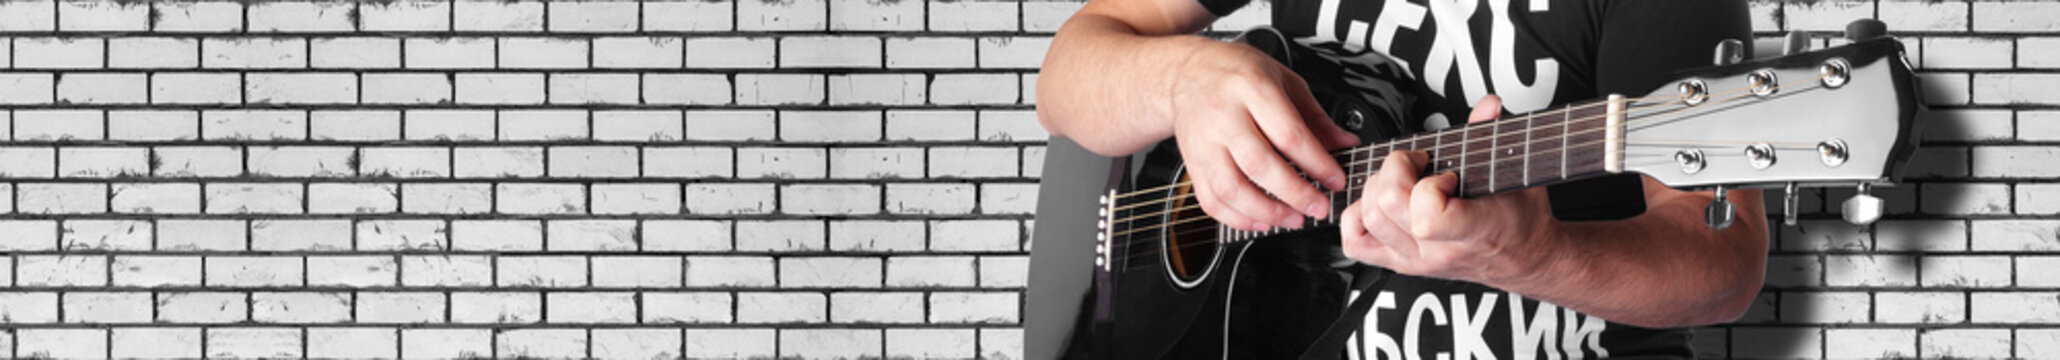 Music - black electric acoustic guitar brick wall